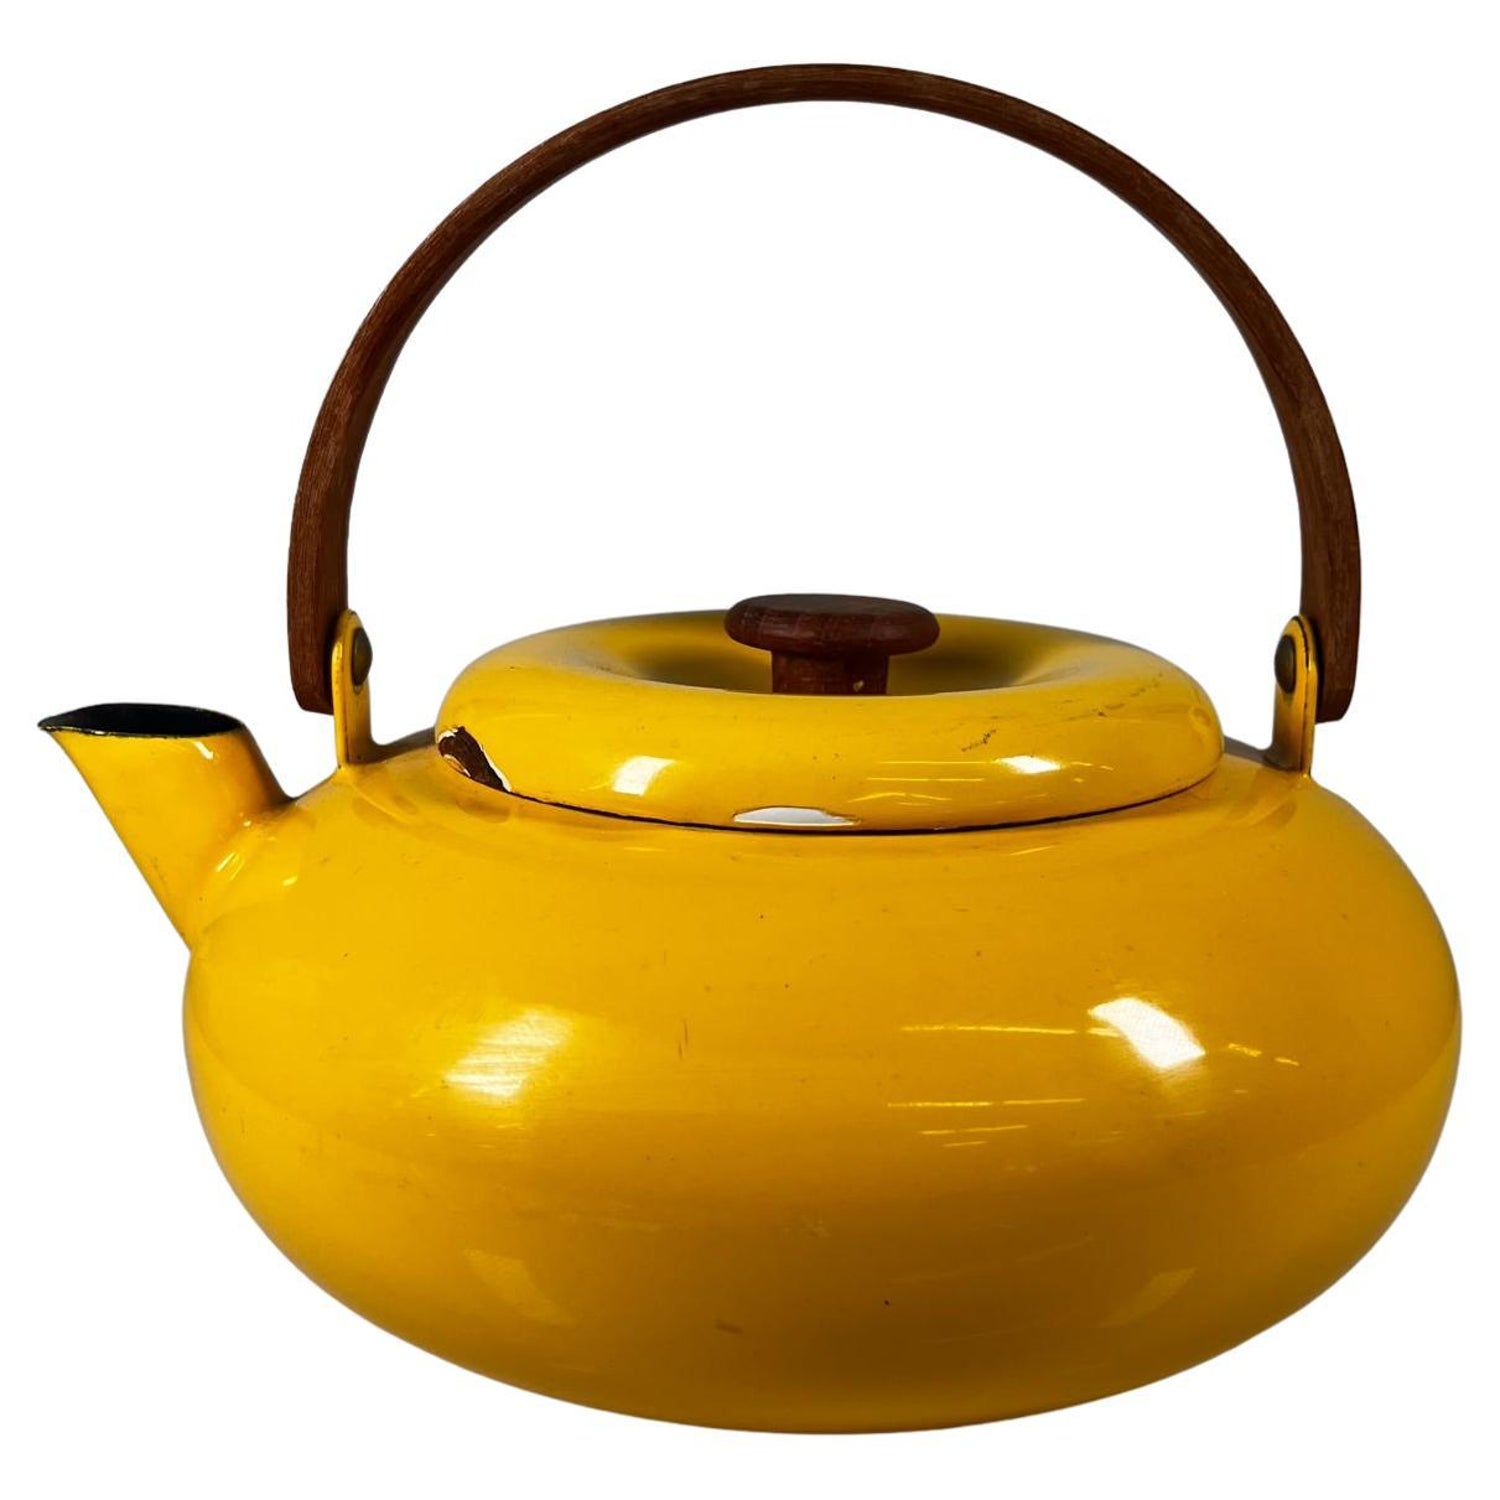 https://a.1stdibscdn.com/1980s-sam-lebowitz-yellow-enamel-tea-kettle-copco-japan-for-sale/f_9715/f_351869321689114115003/f_35186932_1689114115498_bg_processed.jpg?width=1500